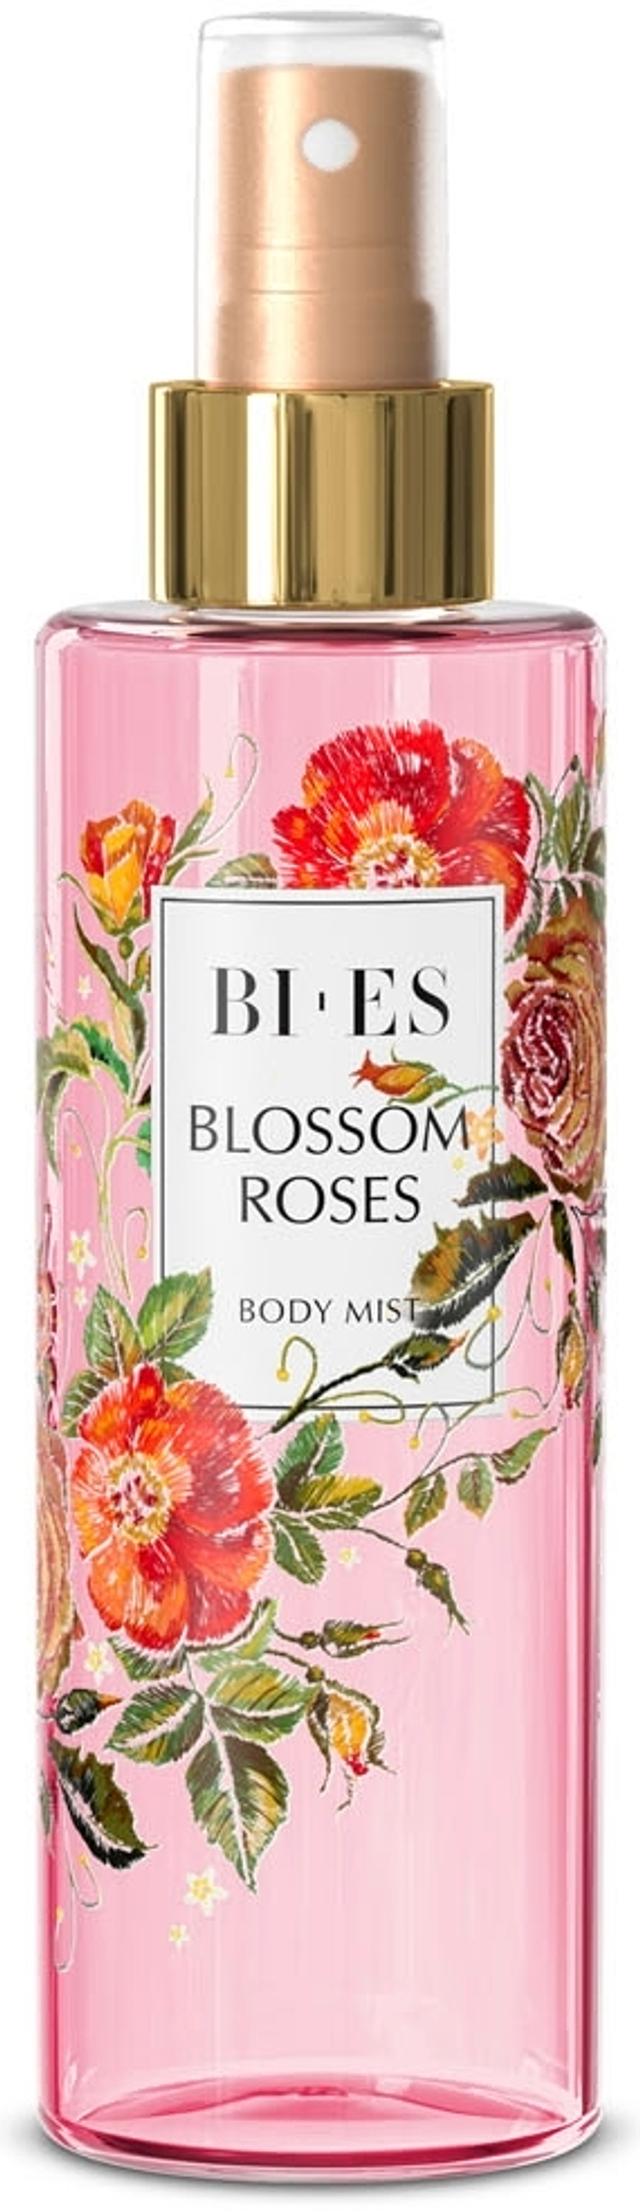 BI-ES Blossom Roses Body Mist 200ml